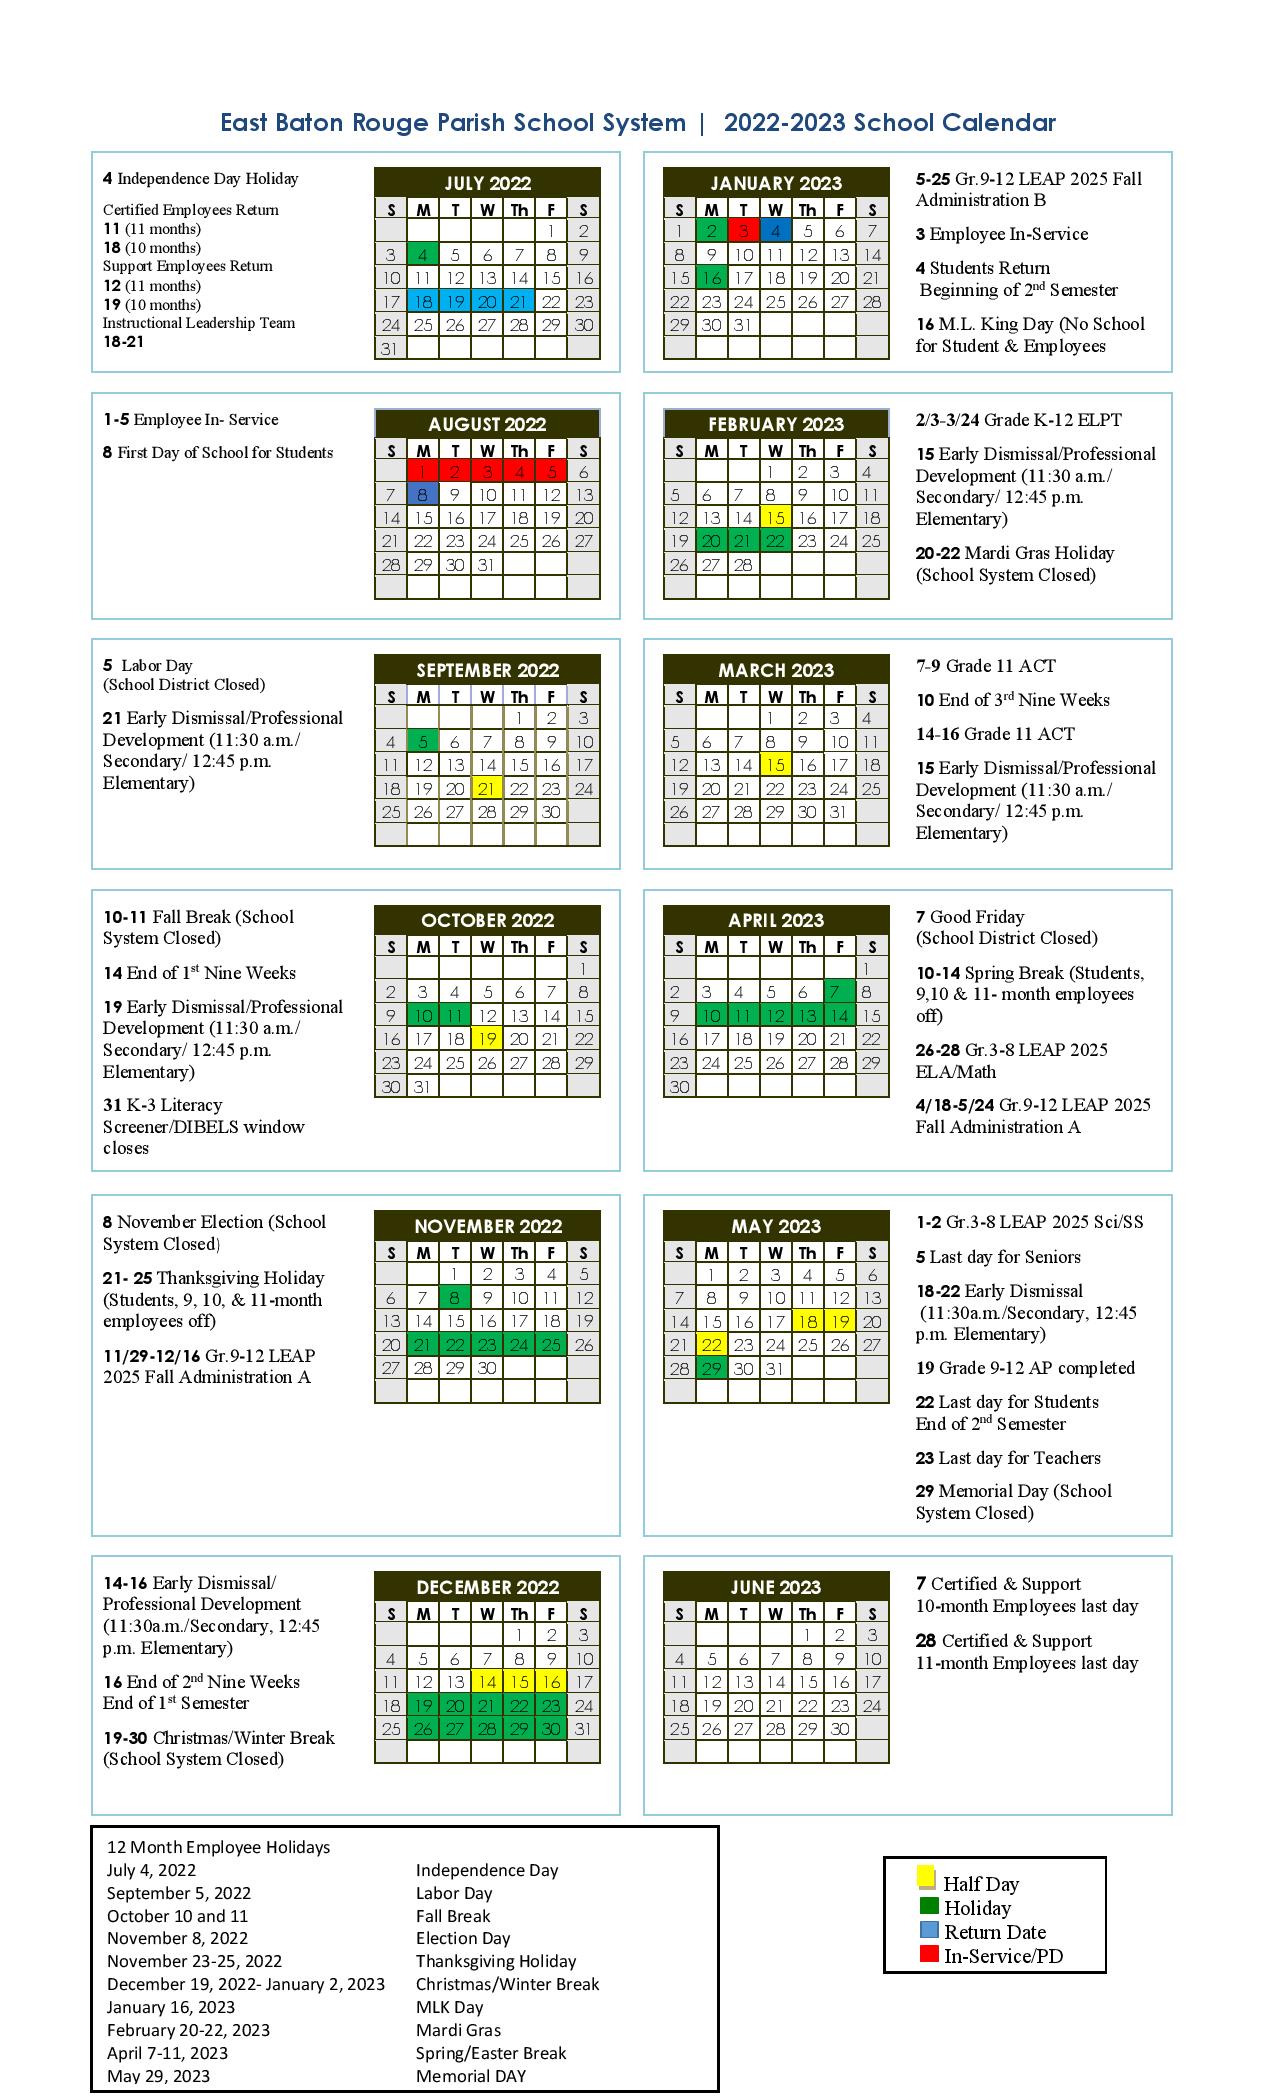 East Baton Rouge Parish Schools Calendar 20222023